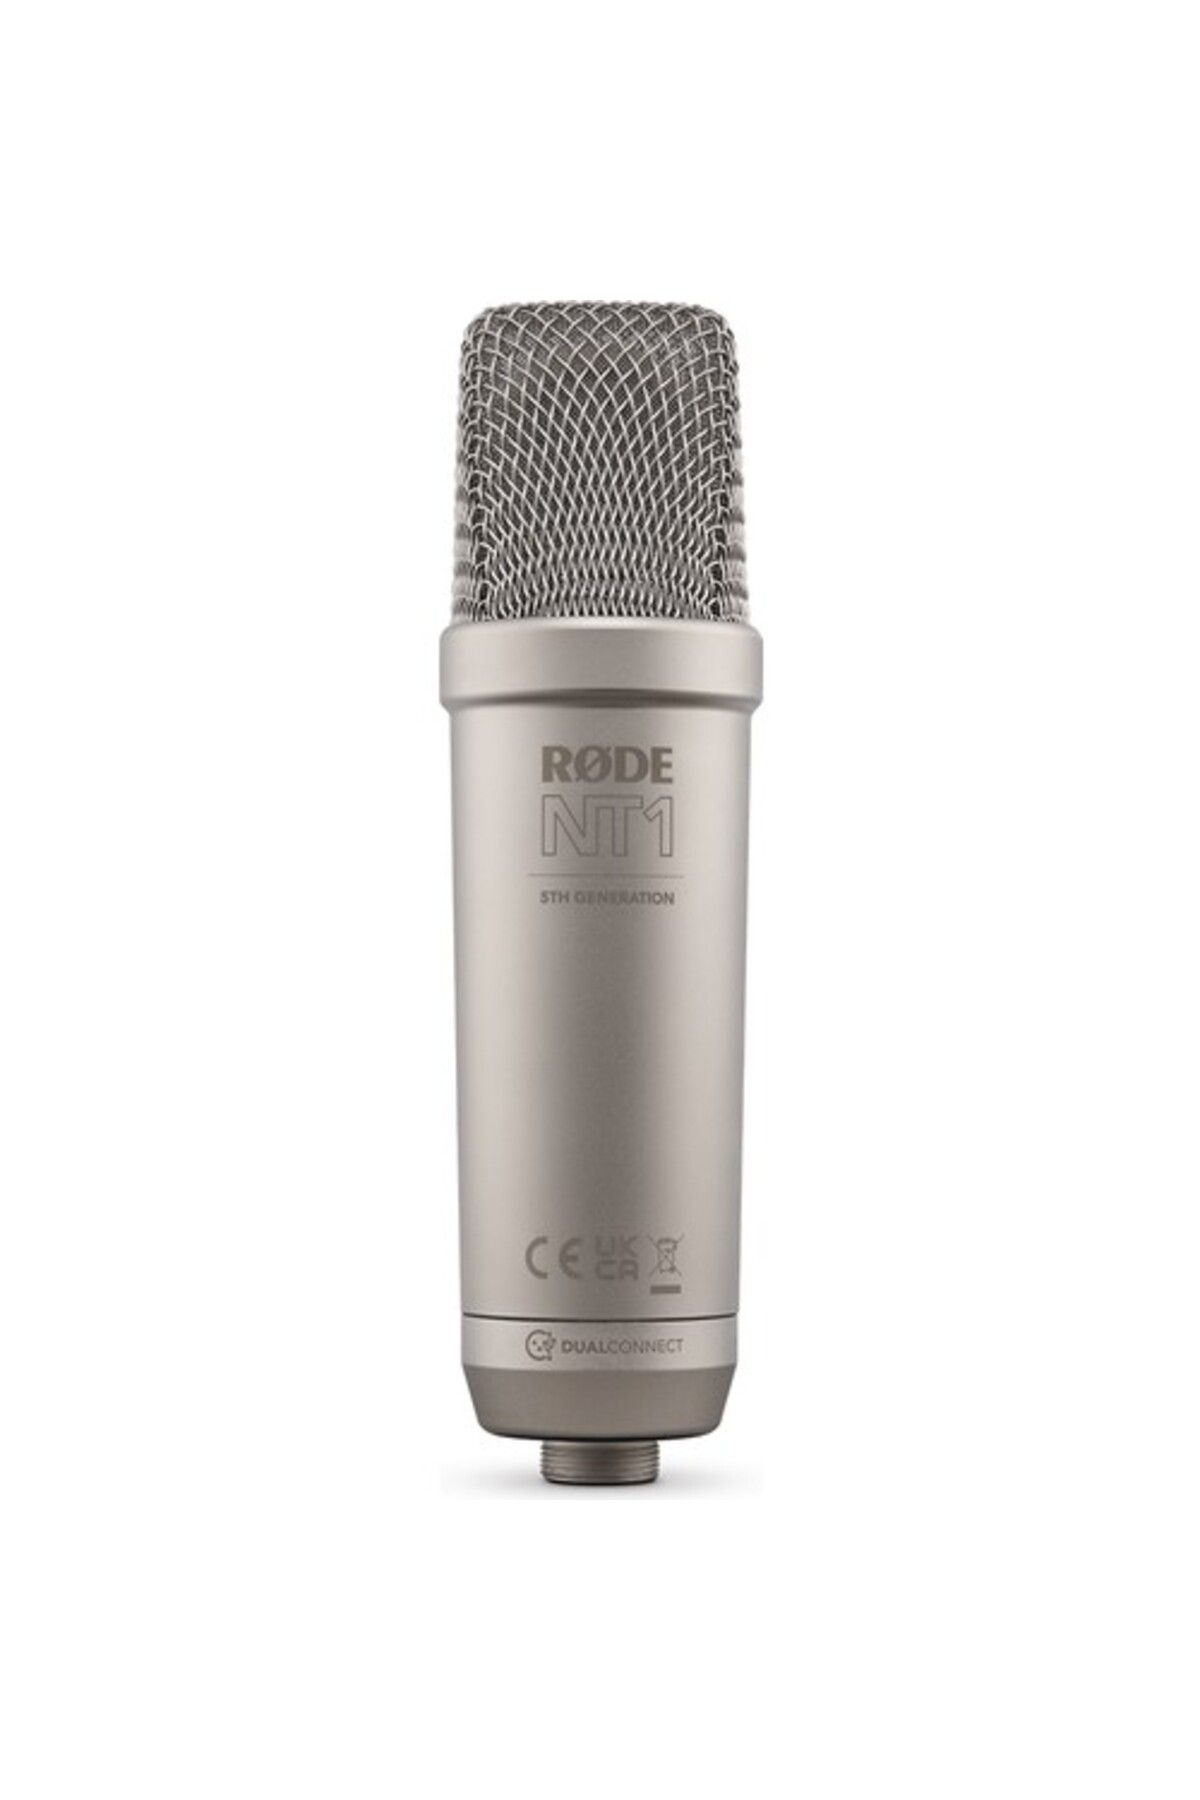 Rode NT1 5th Generation Silver - Yeni nesil Analog/Dijital Cardioid Kondansatör Mikrofon